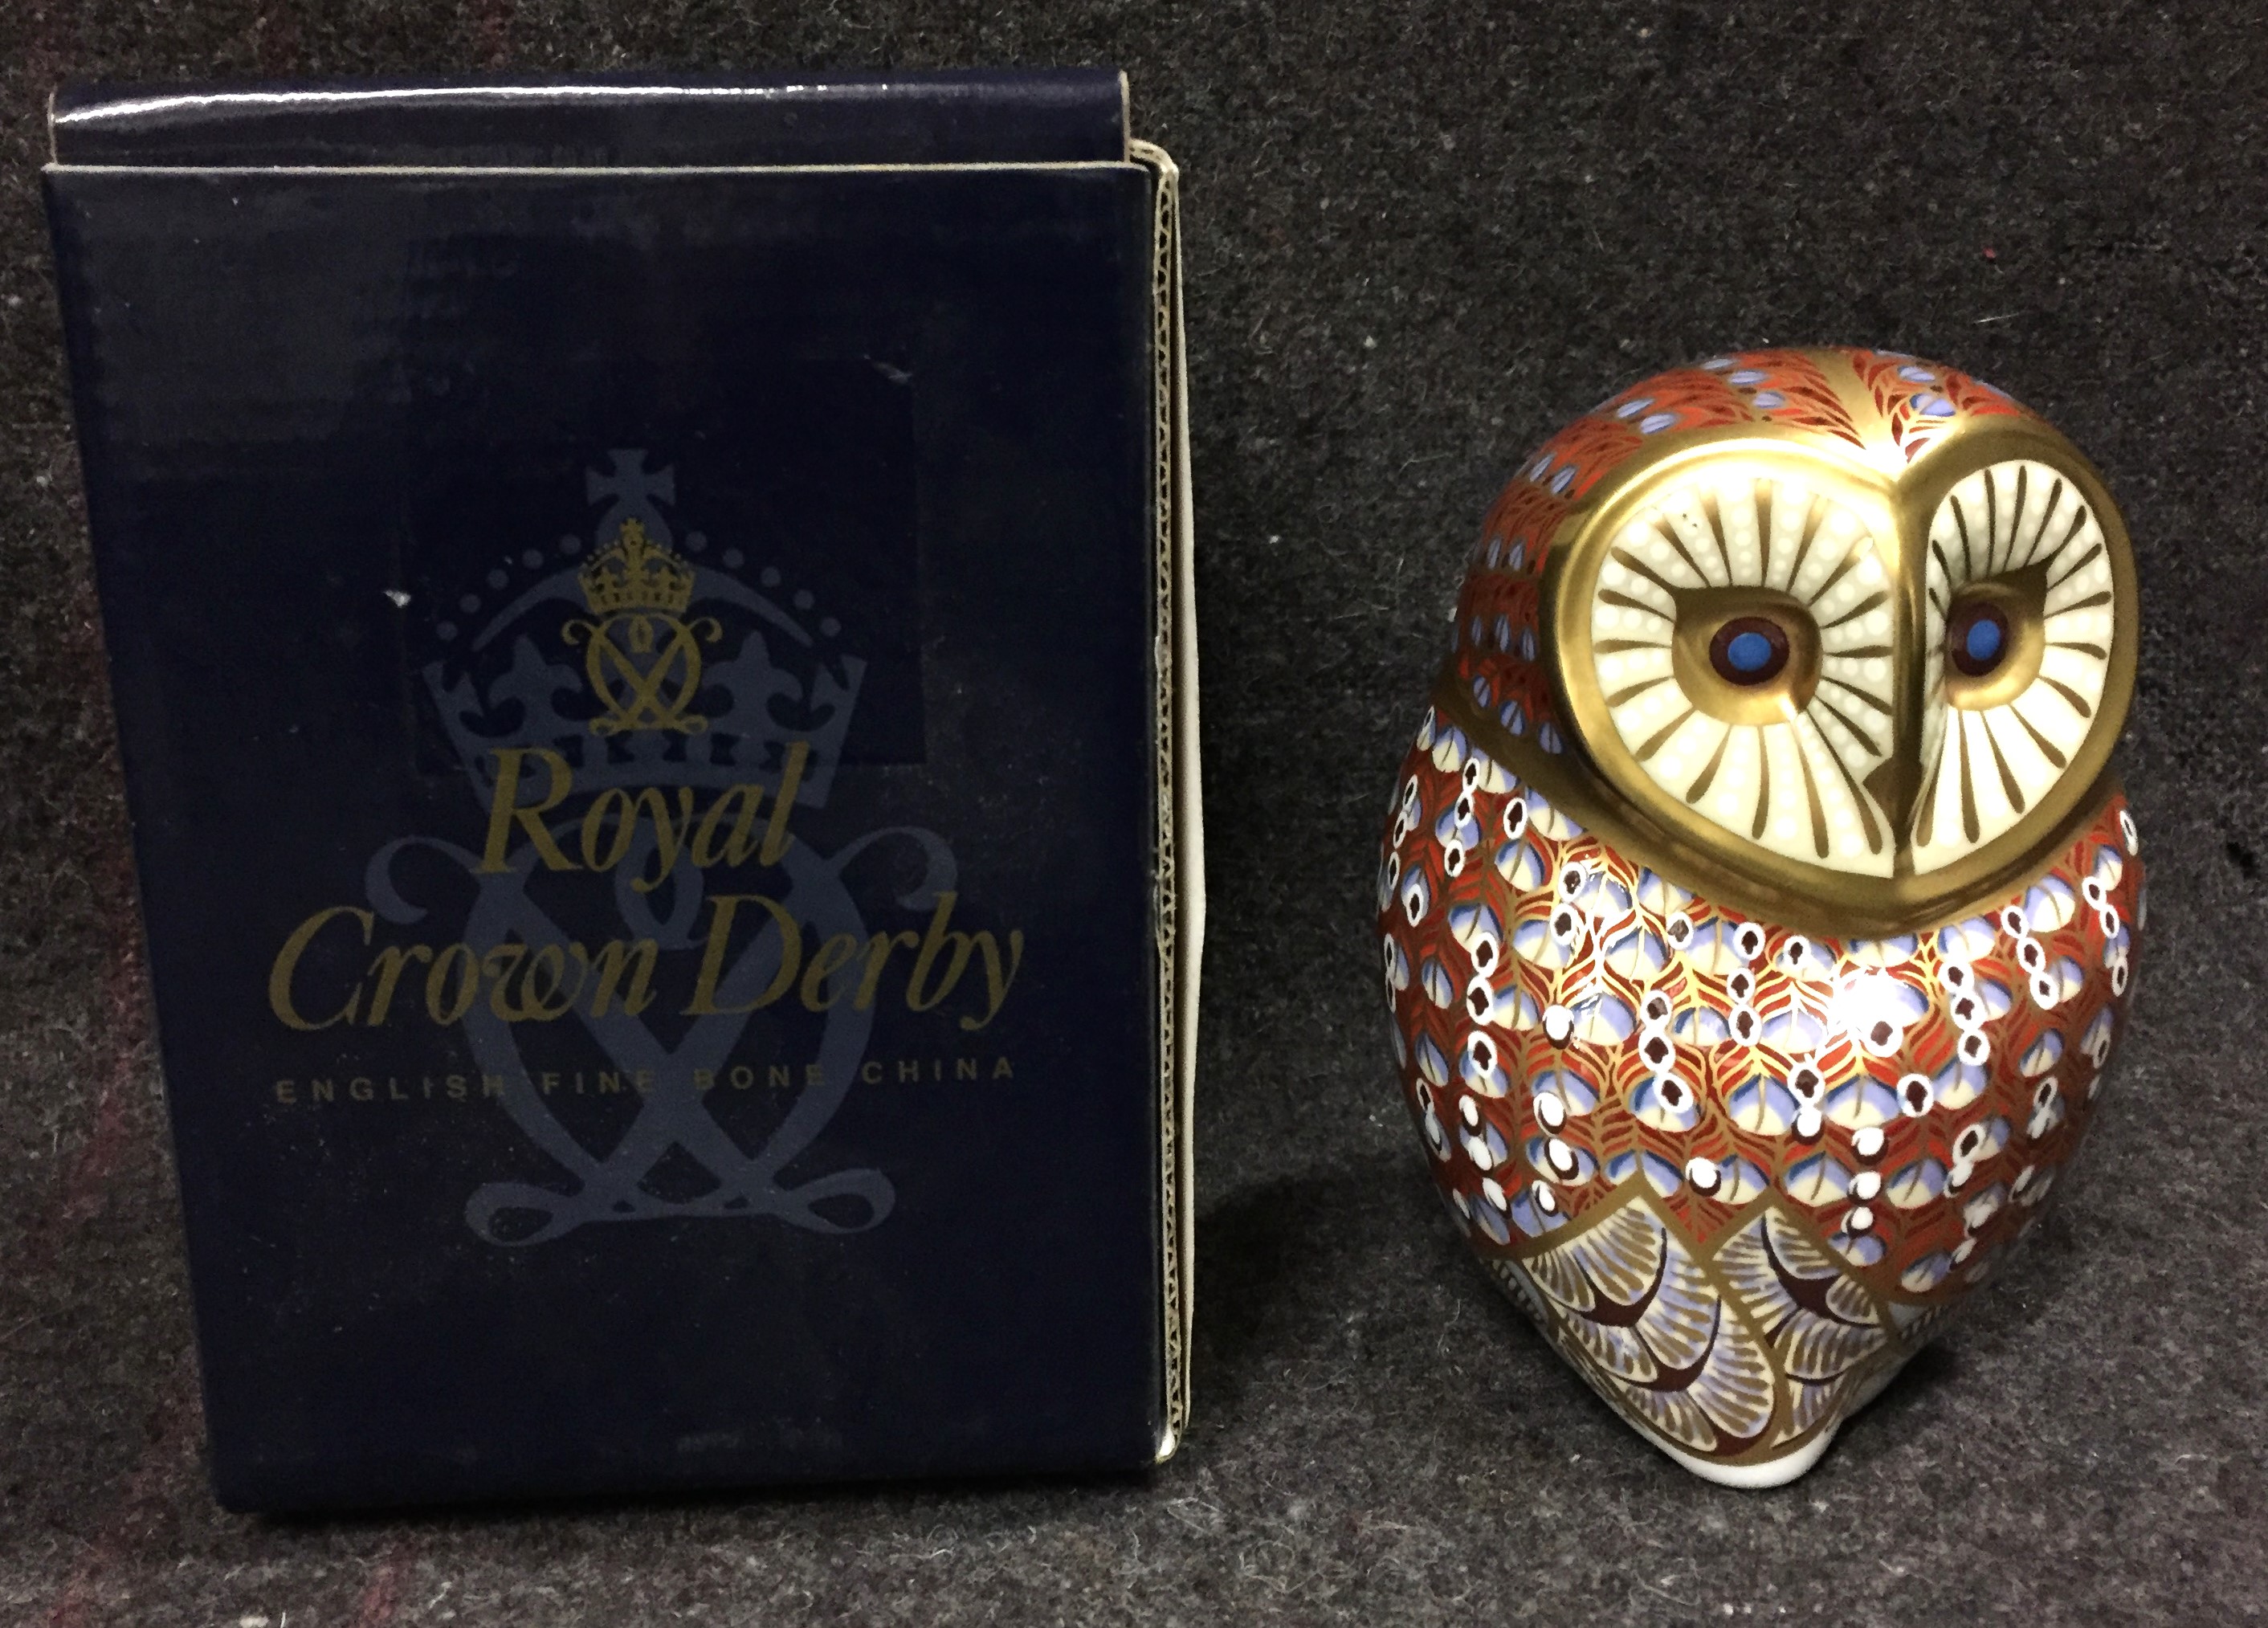 Royal Crown Derby Barn Owl paperweight 11cm high with box (saleroom location Y05 2)